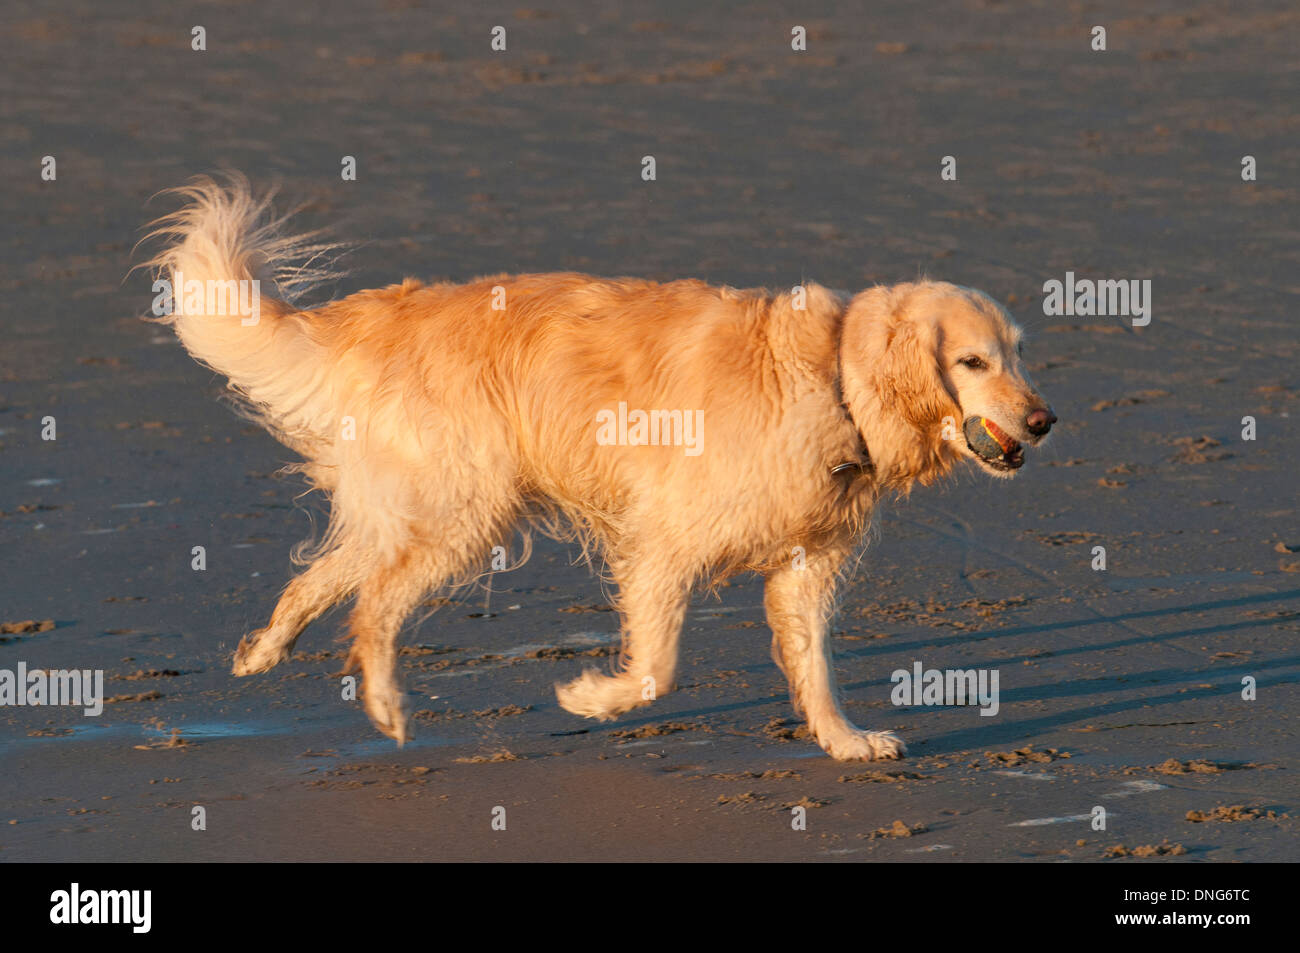 Golden retriever running on beach Stock Photo